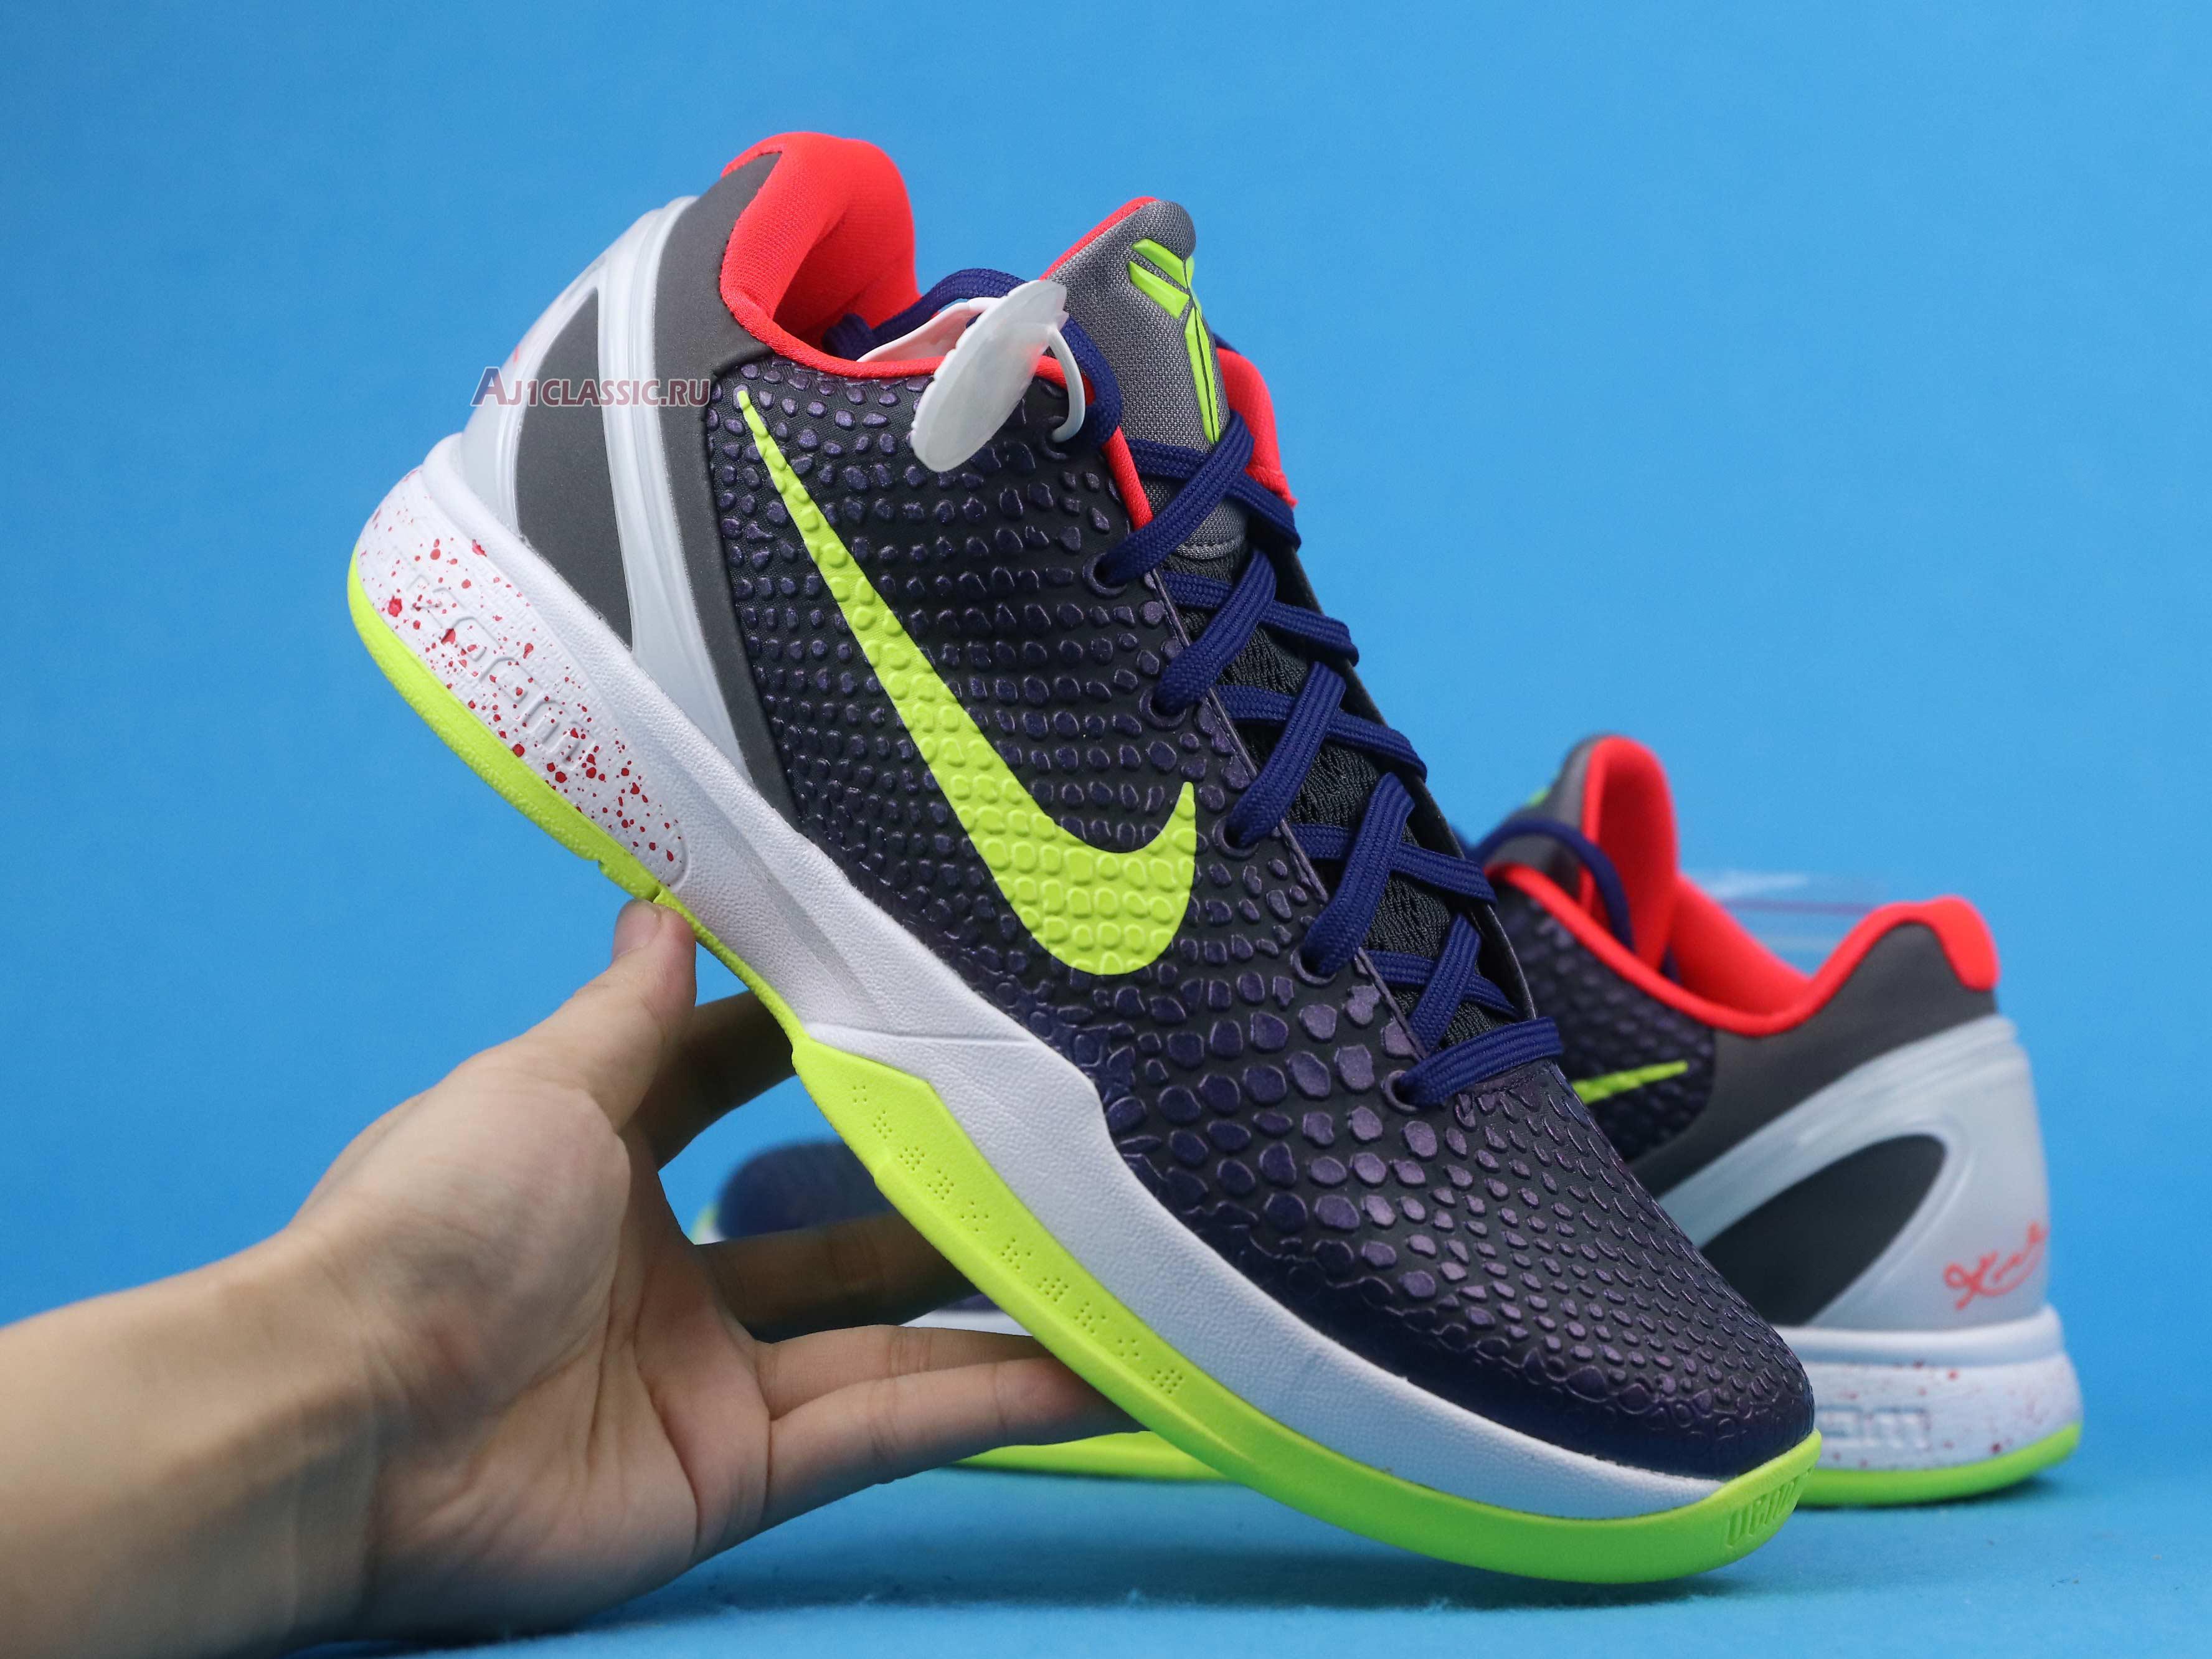 Nike Zoom Kobe 6 Supreme "Chaos" 446442-500